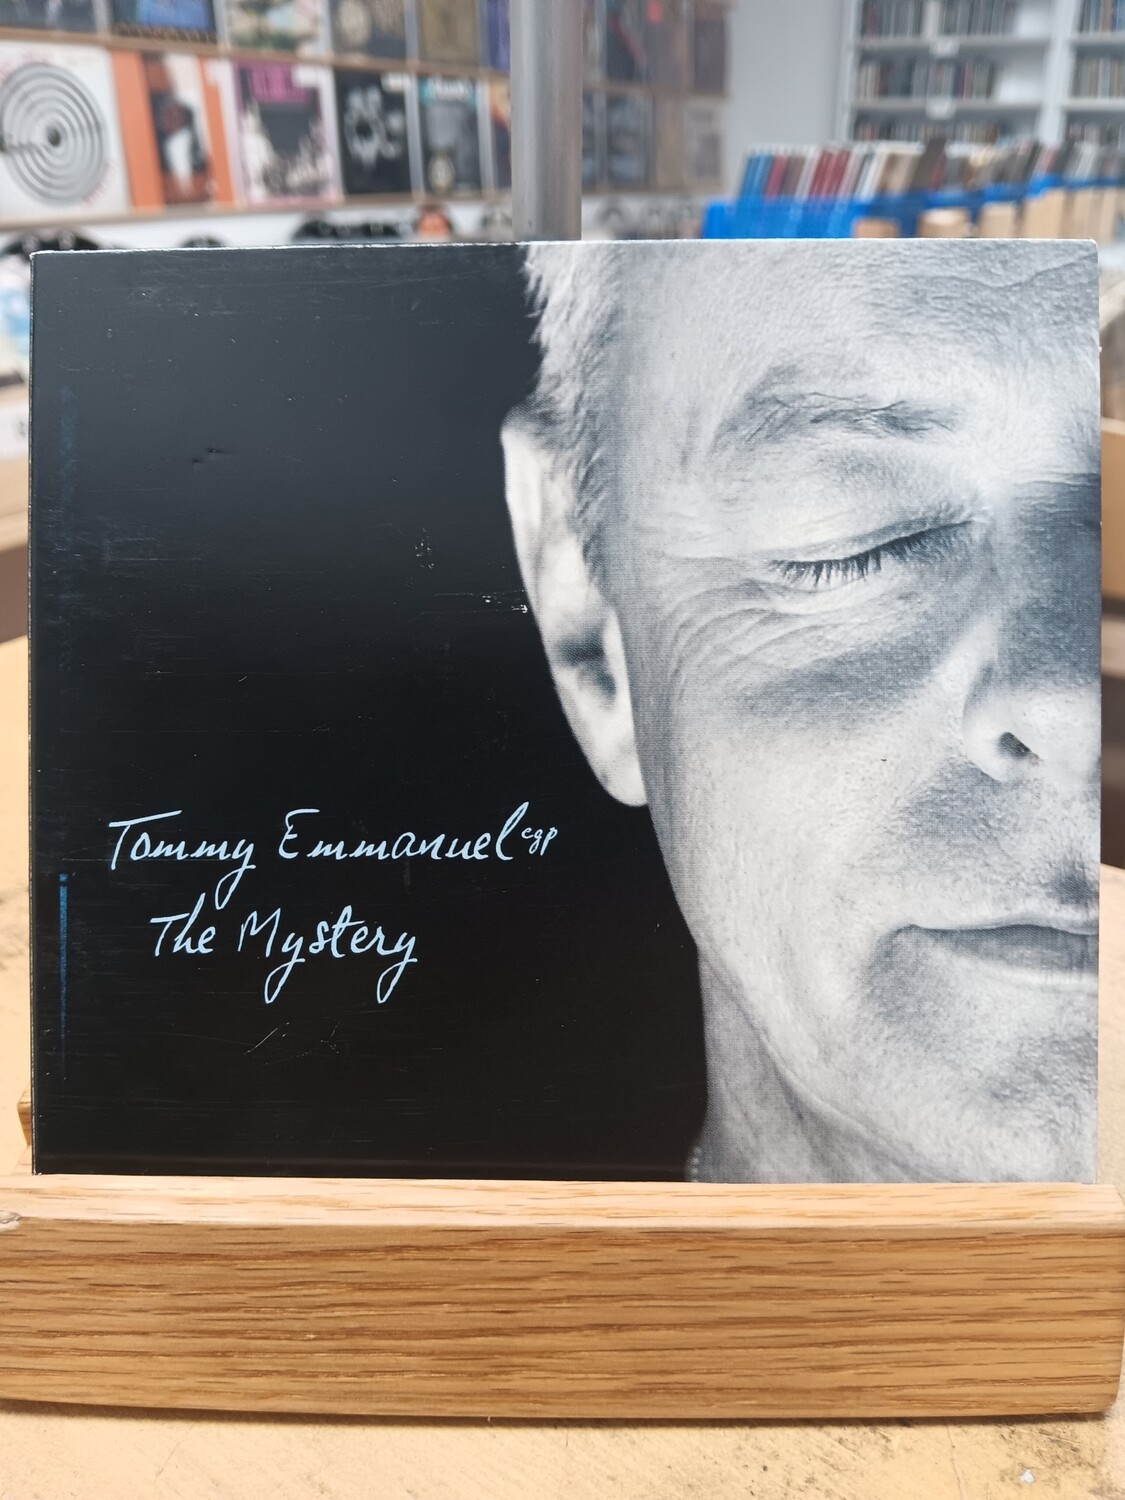 TOMMY EMMANUEL - The Mystery (CD)